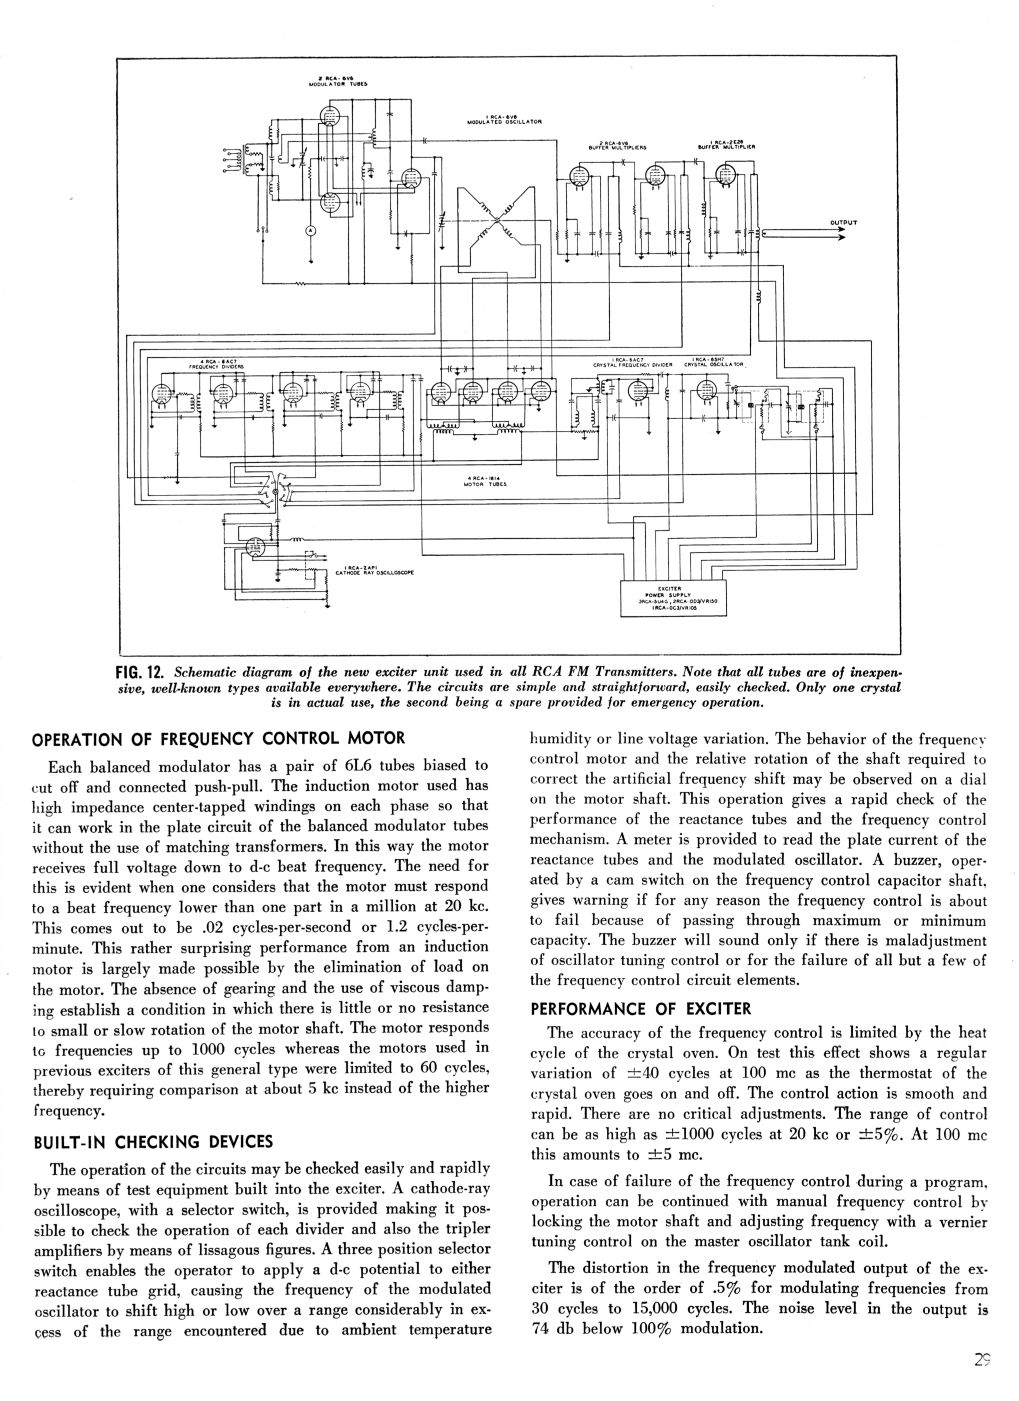 RCA MI-7015 Direct FM Exciter, page 6